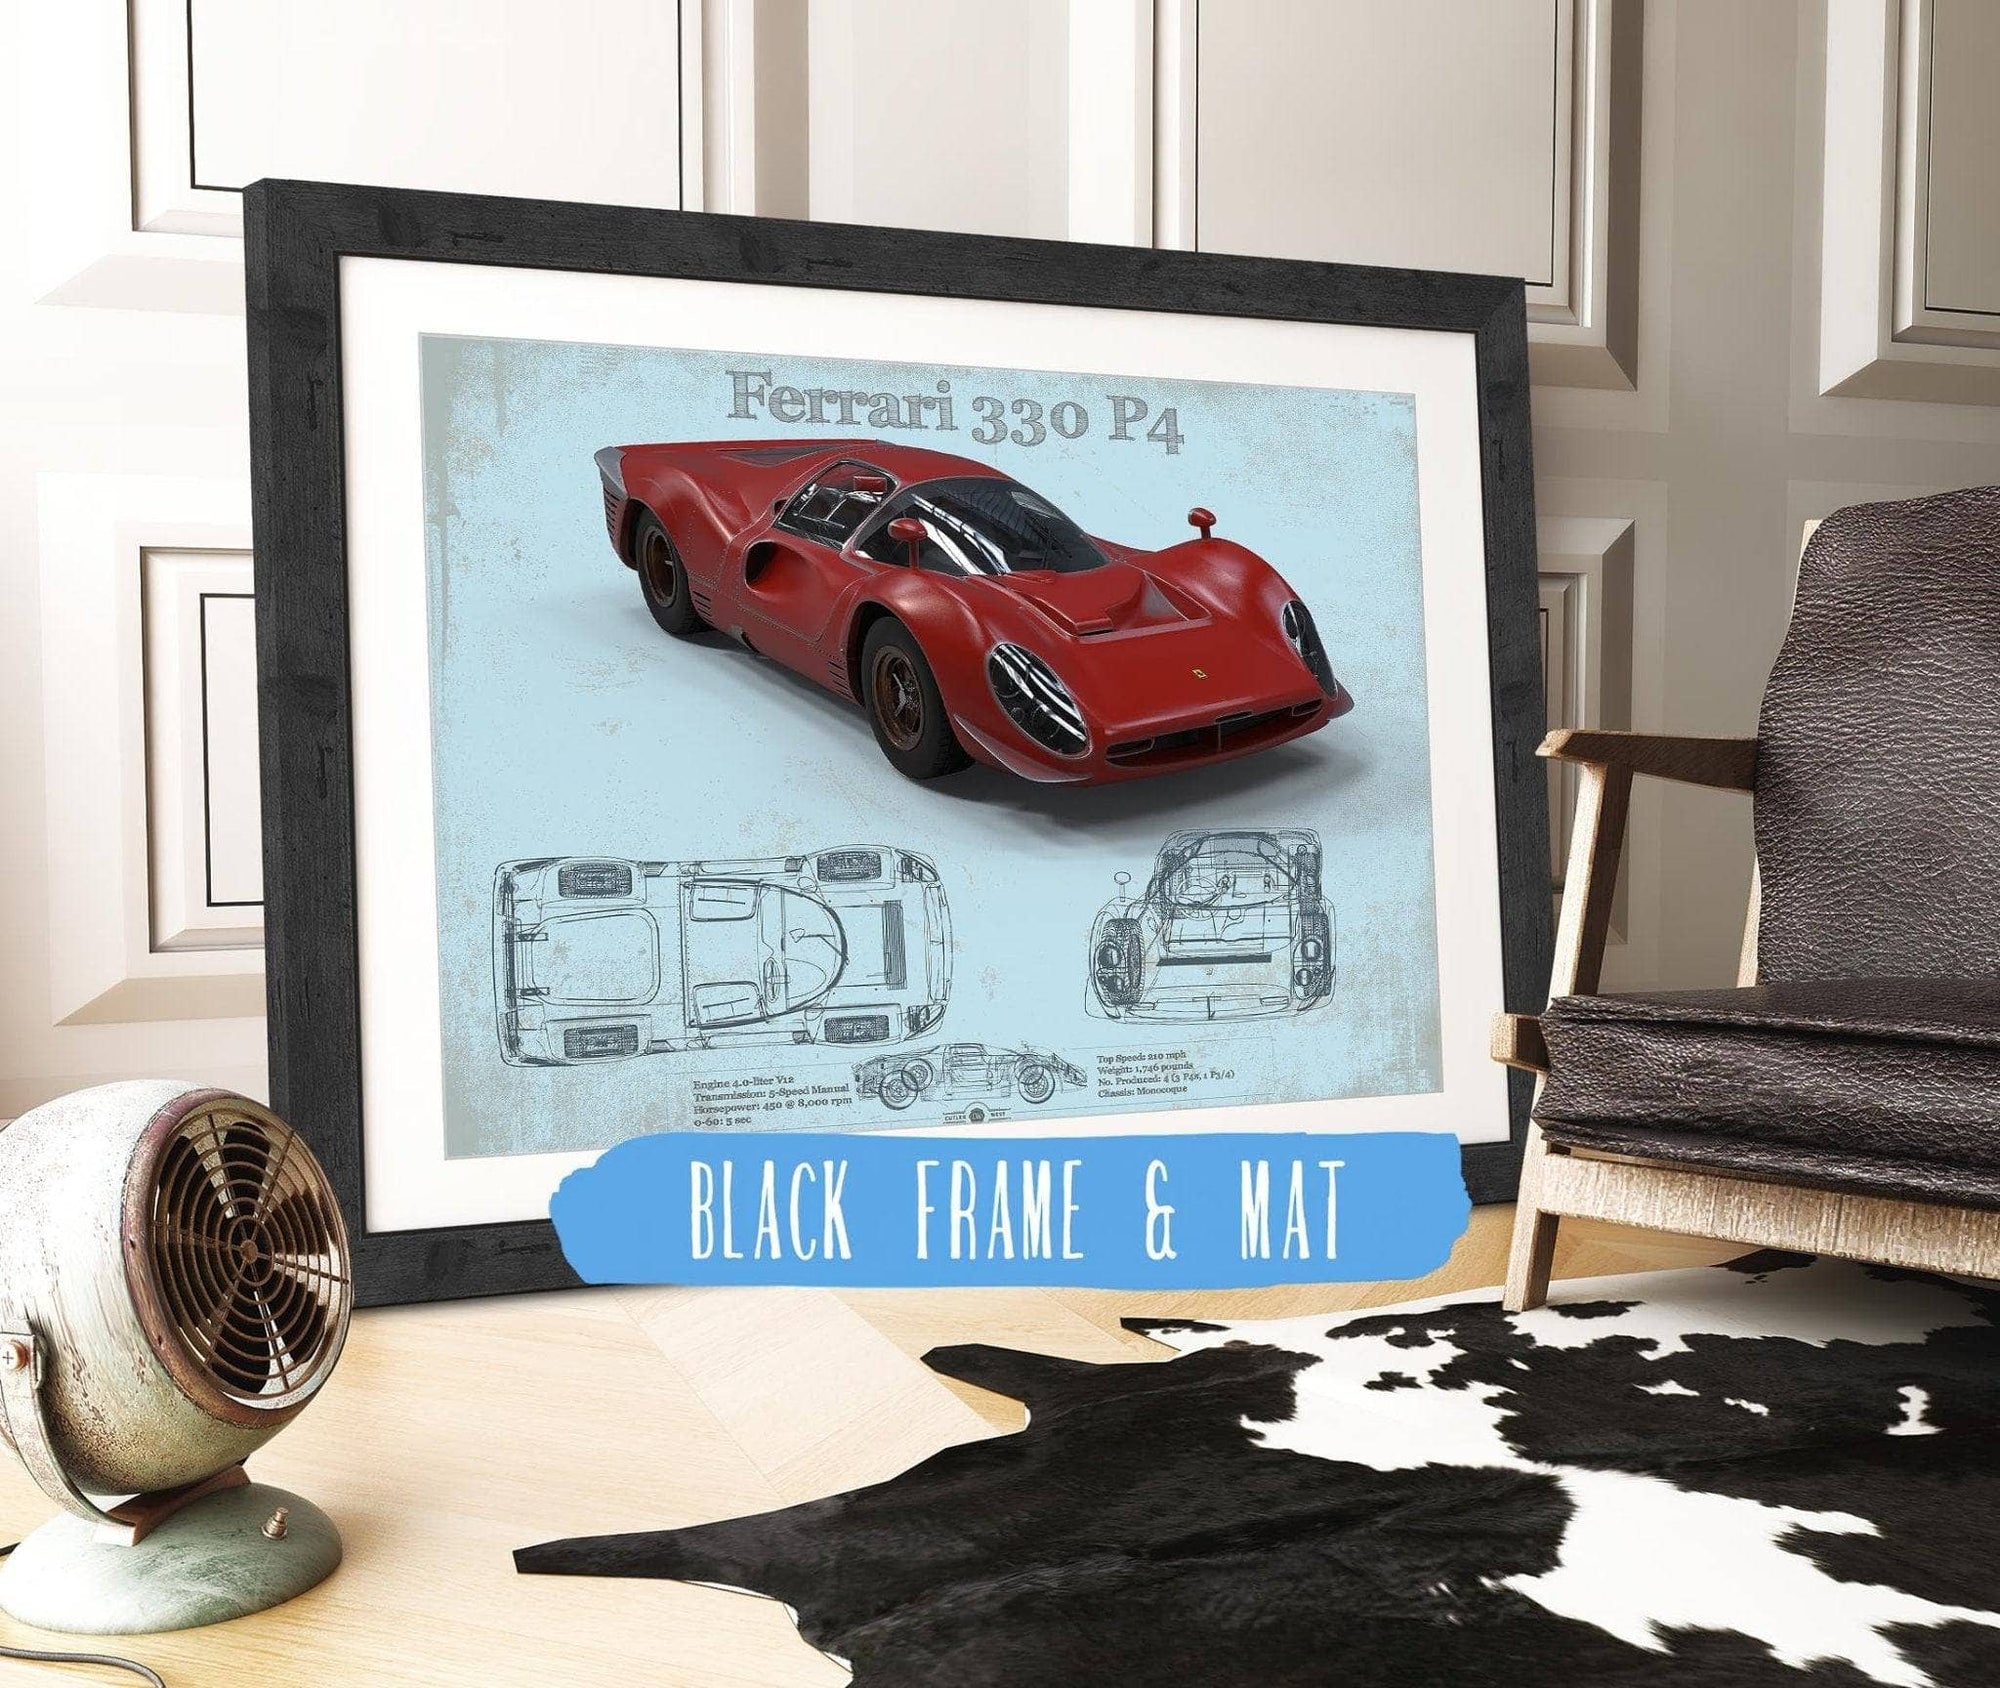 Cutler West Ferrari Collection 14" x 11" / Black Frame & Mat Ferrari 330 P4 Vintage Sports Car Print 845000143_61741